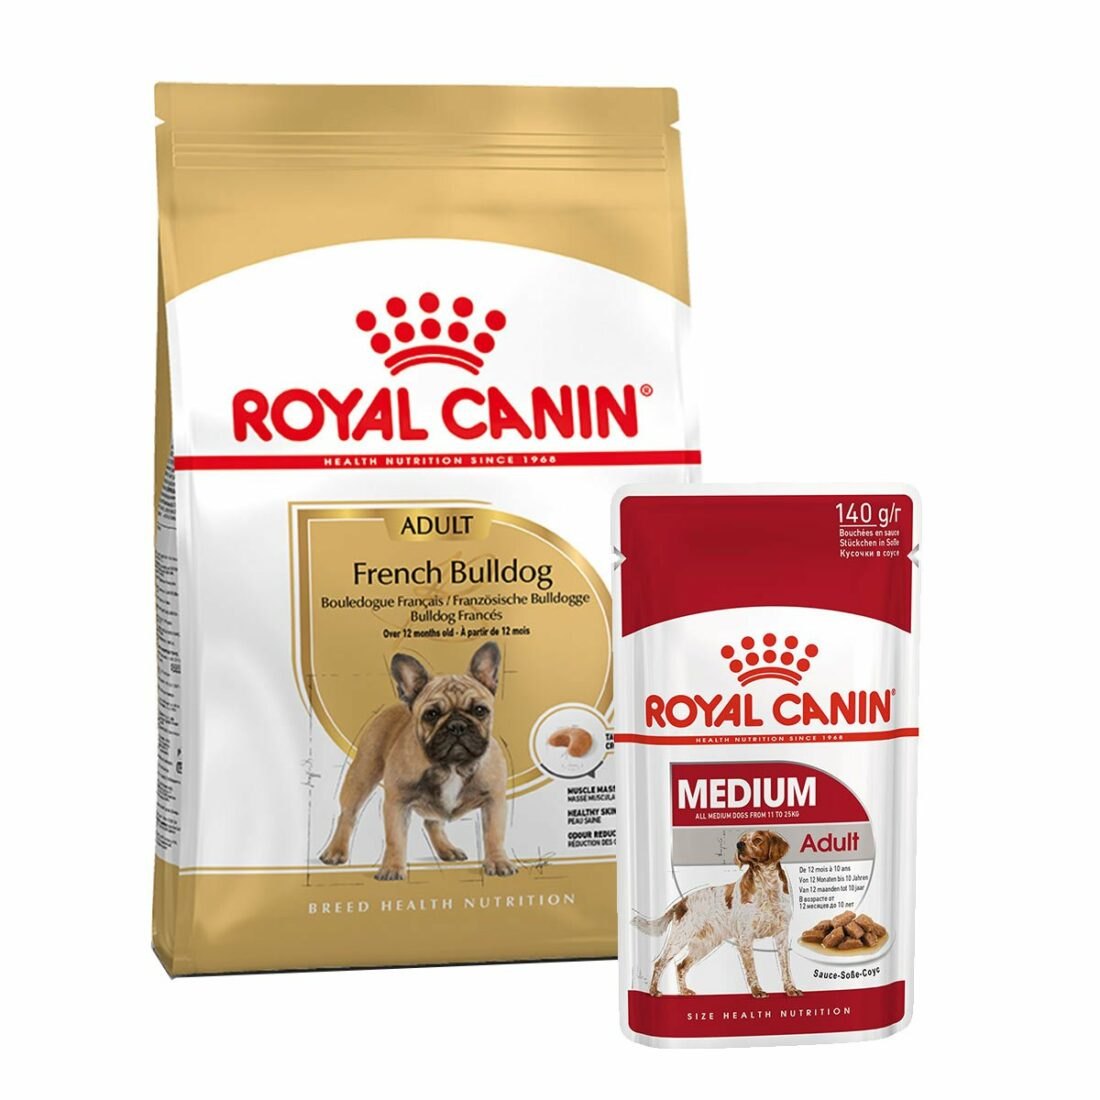 ROYAL CANIN French Bulldog Adult 3 kg + Medium